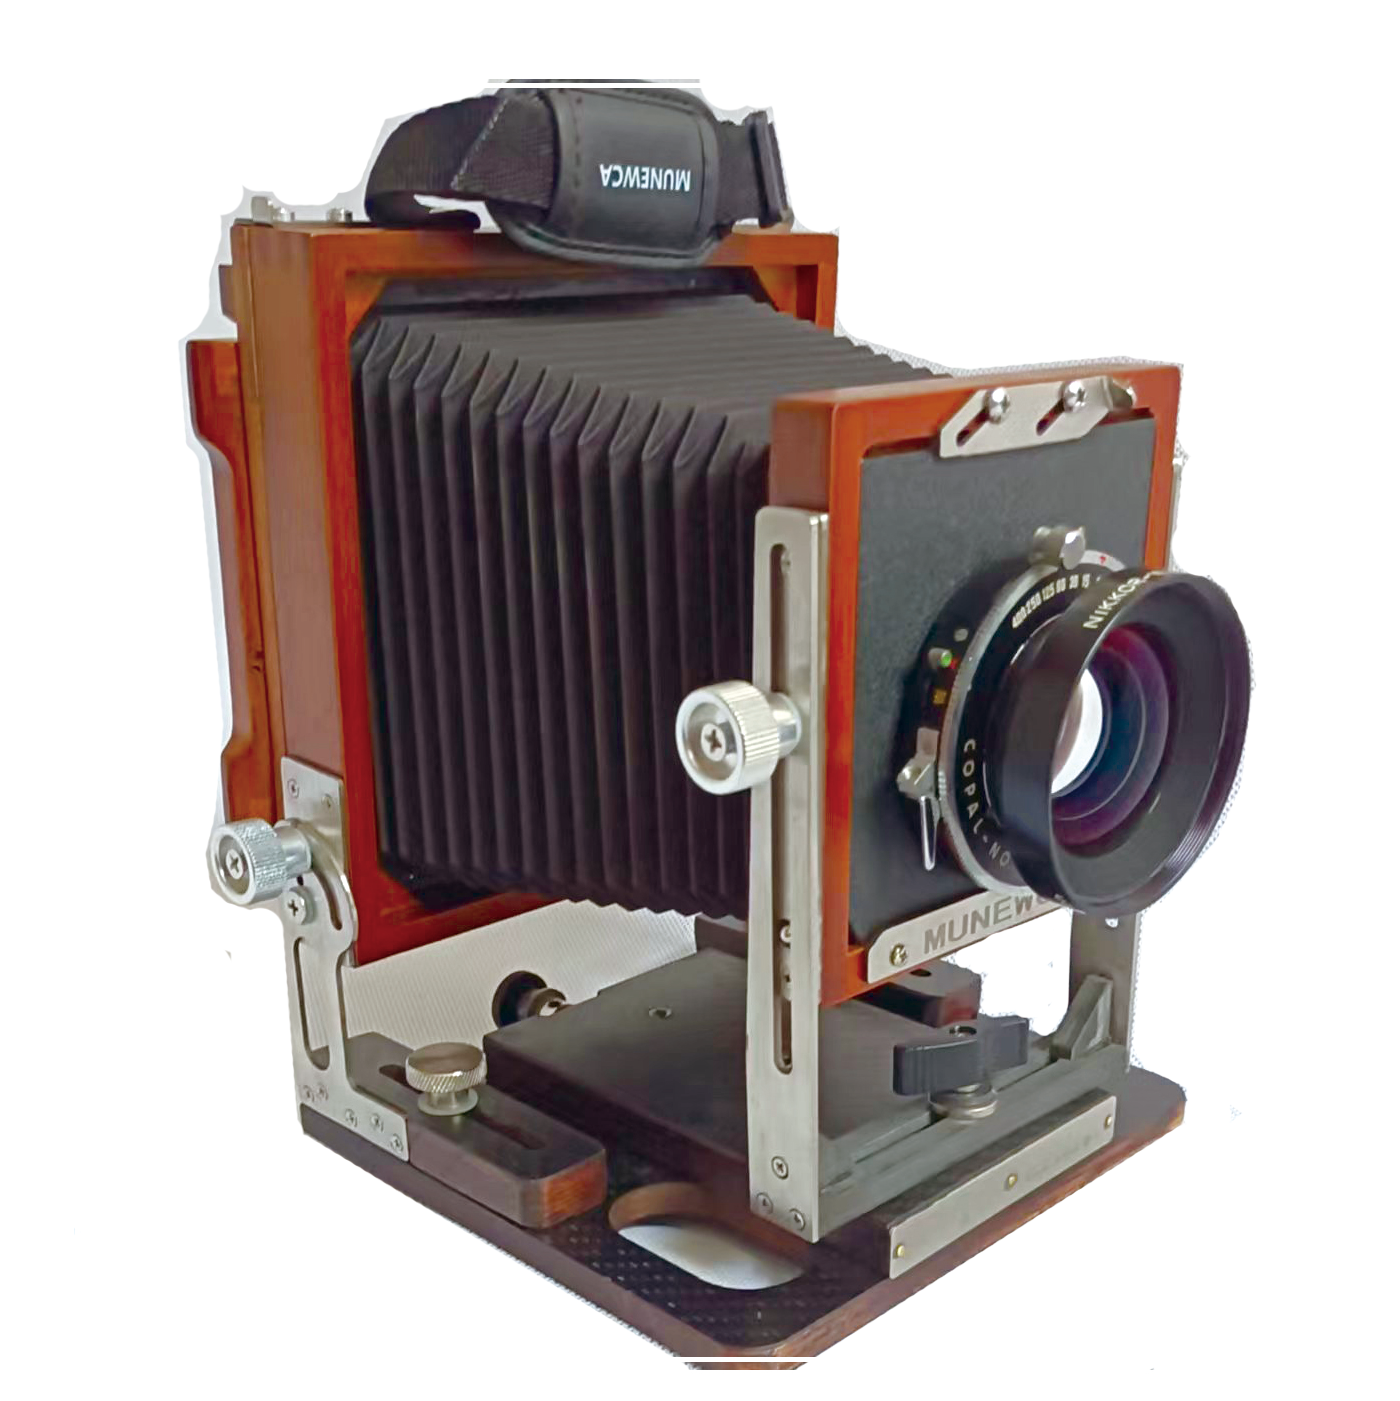 Munewca 木牛大画幅相机 4X5 8X10 全系列双轨技术相机可折叠包邮 - 图3